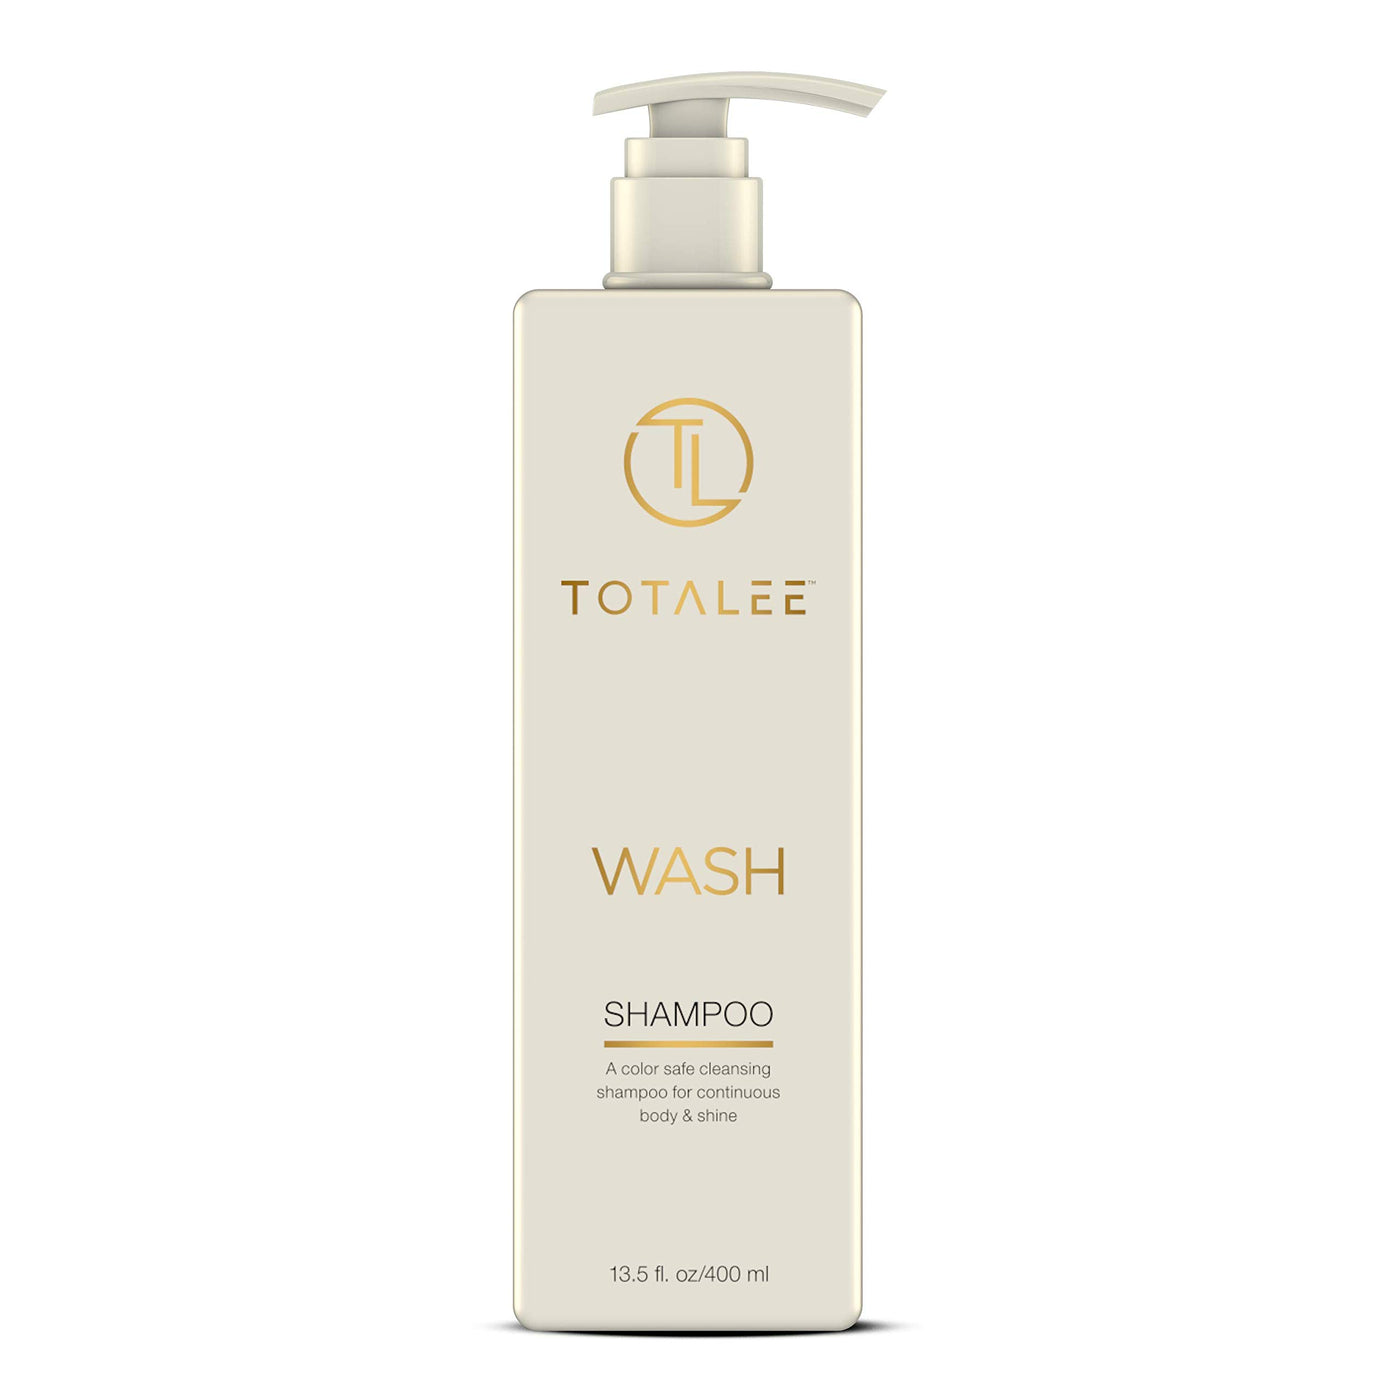 TOTALEE WASH Nourishing Shampoo 13.5 fl oz Lot of 22